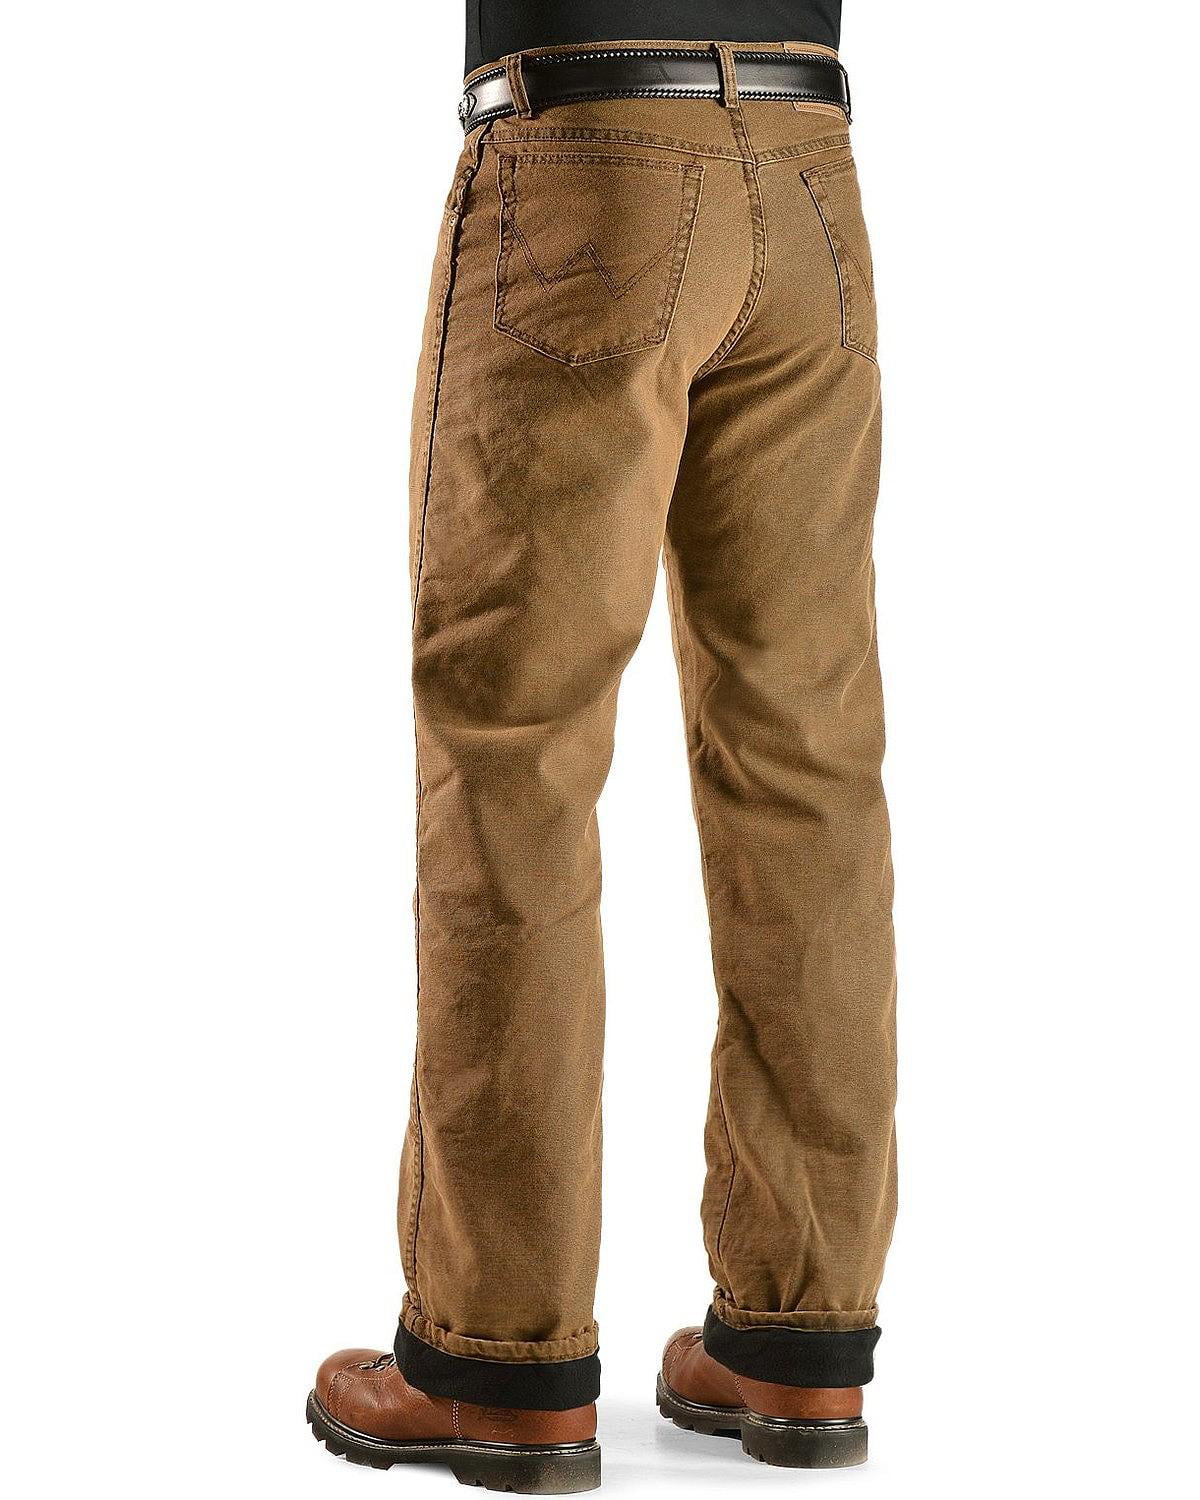 wrangler jeans flannel lined